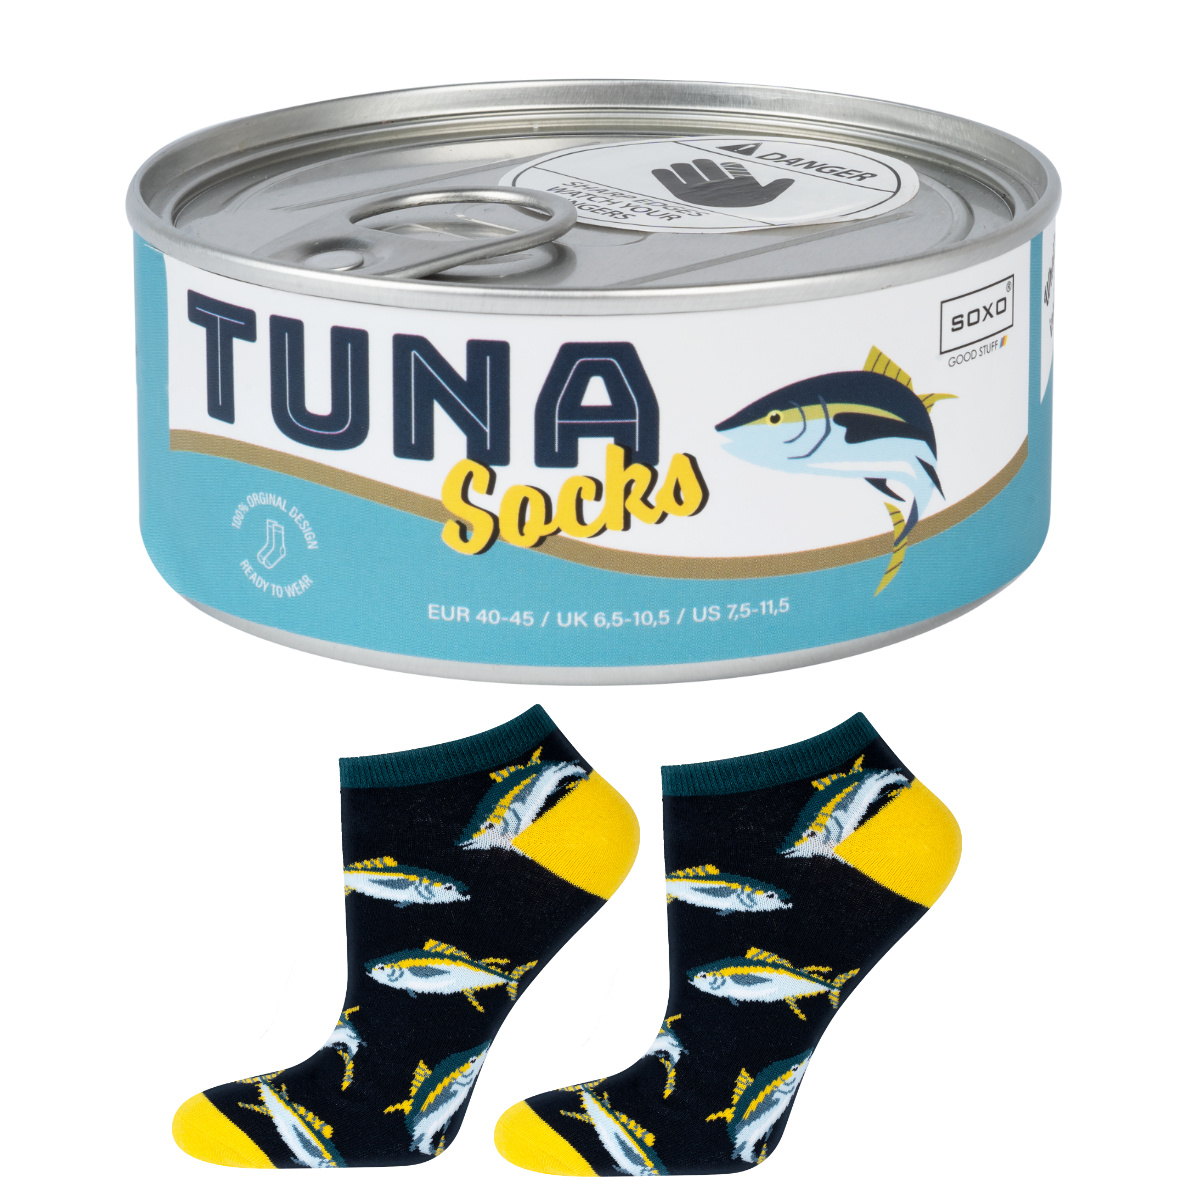 Men's socks SOXO GOOD STUFF funny tuna canned gift idea - price